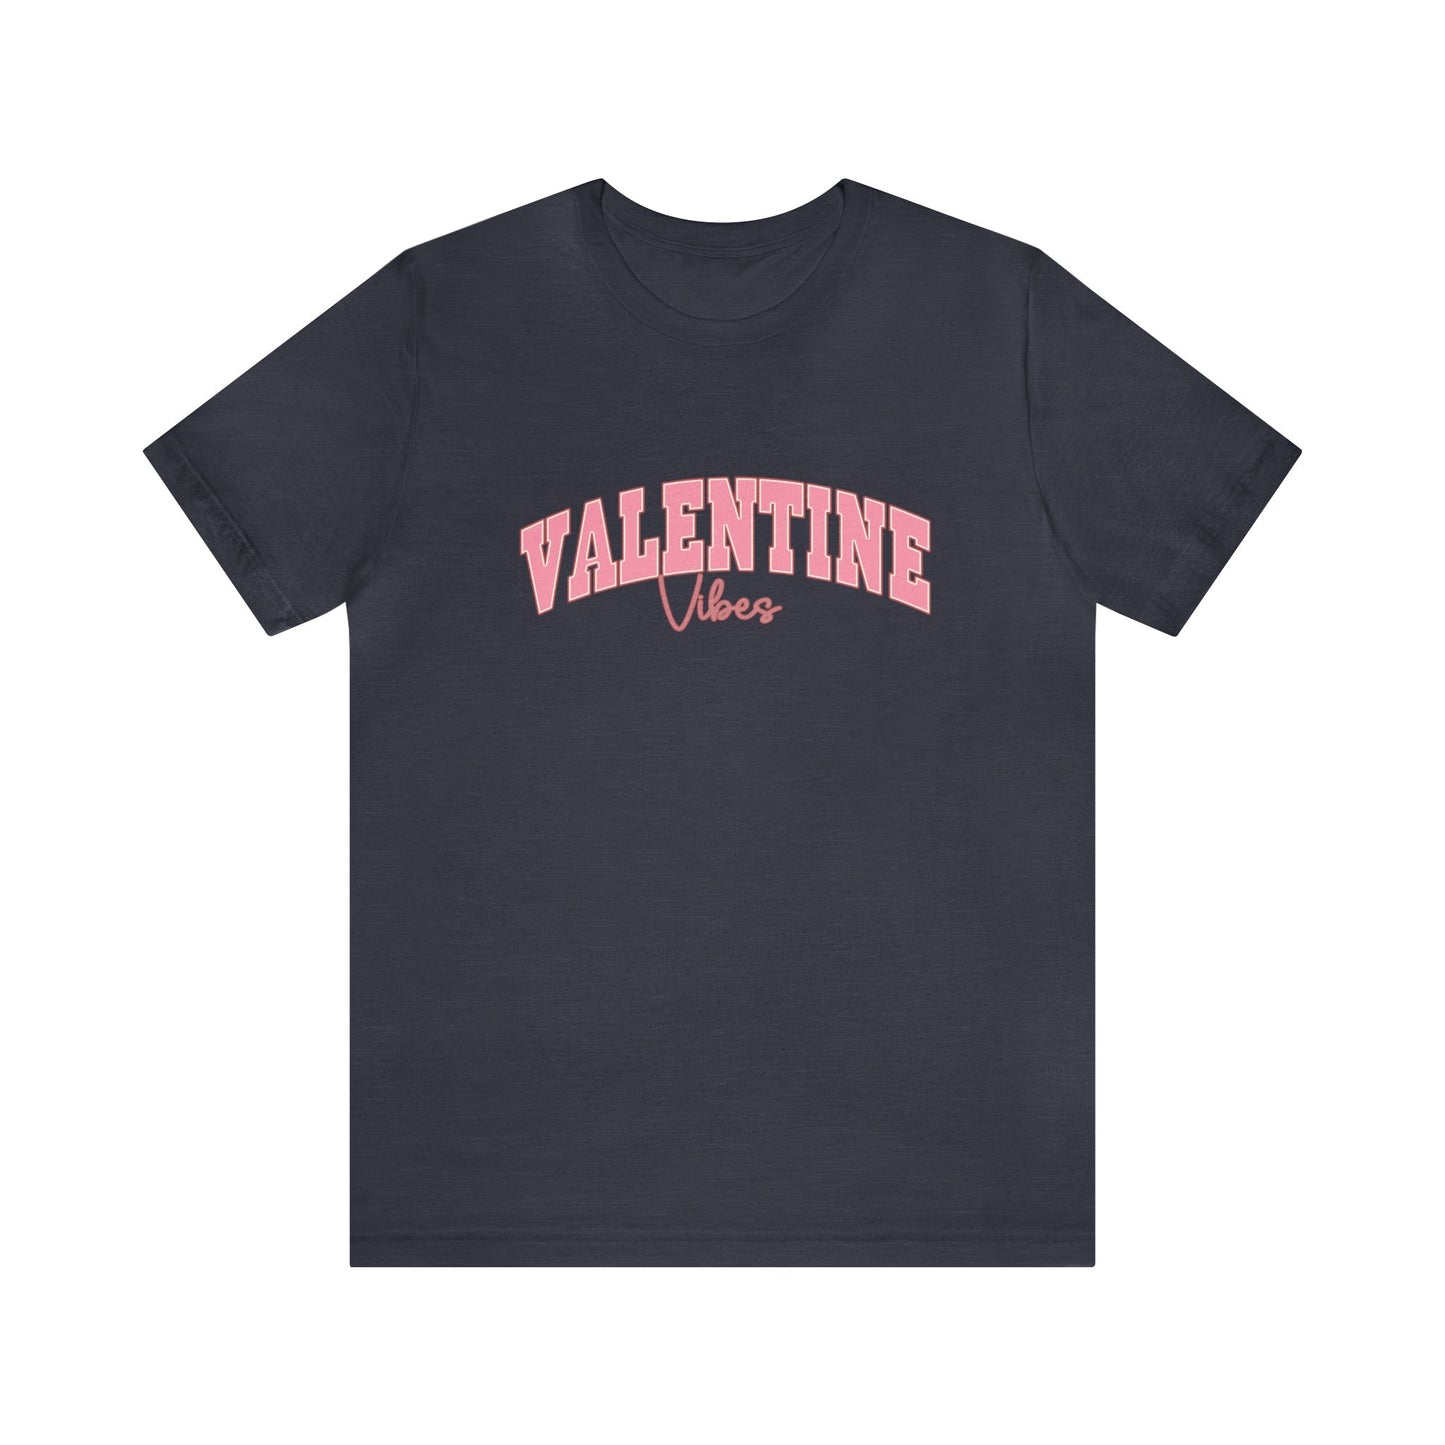 Valentine Vibes Women's Tshirt